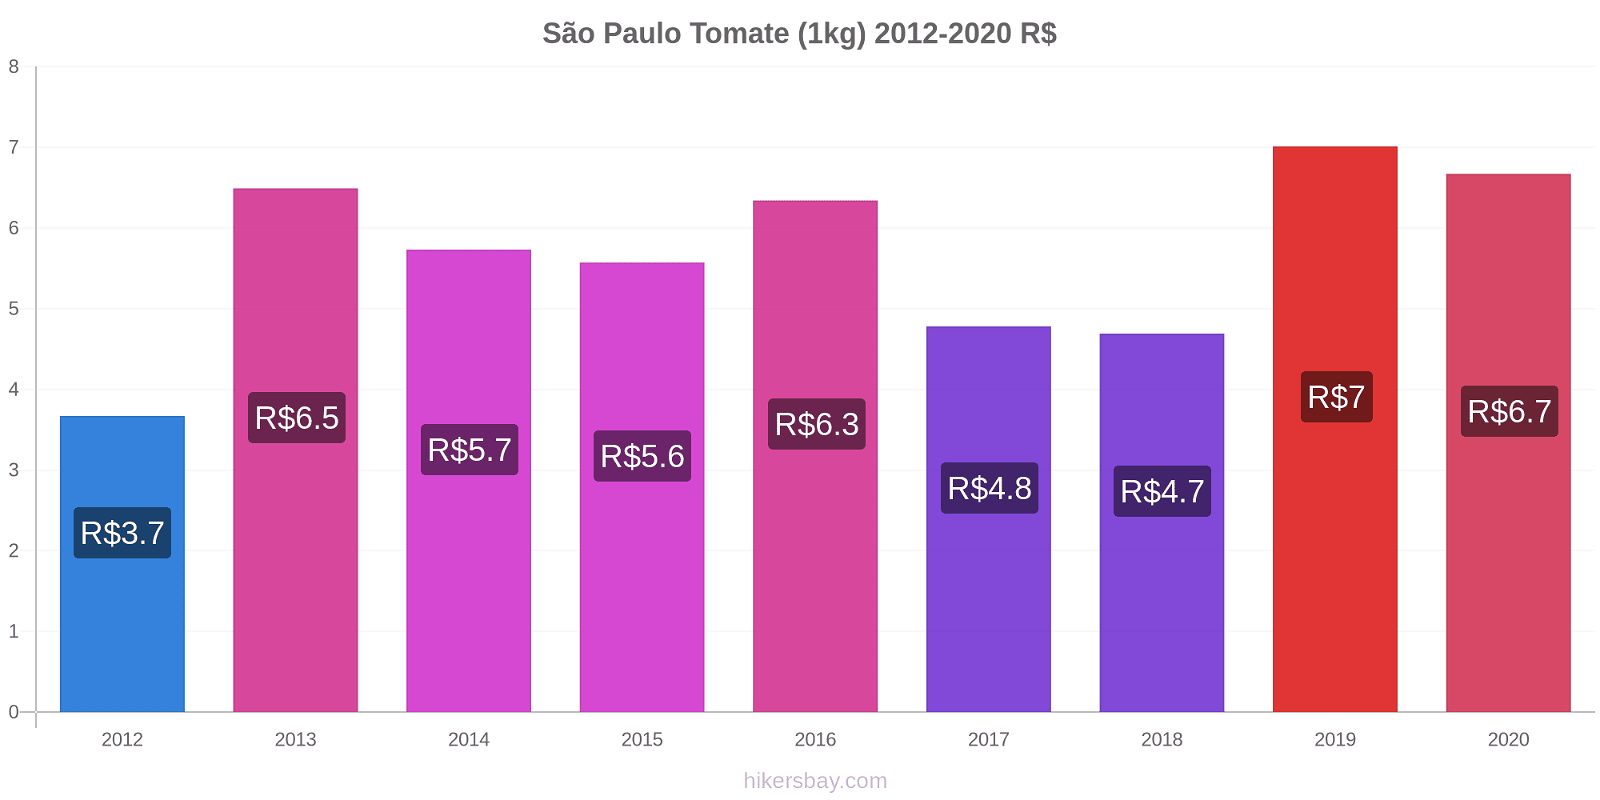 São Paulo changements de prix Tomate (1kg) hikersbay.com